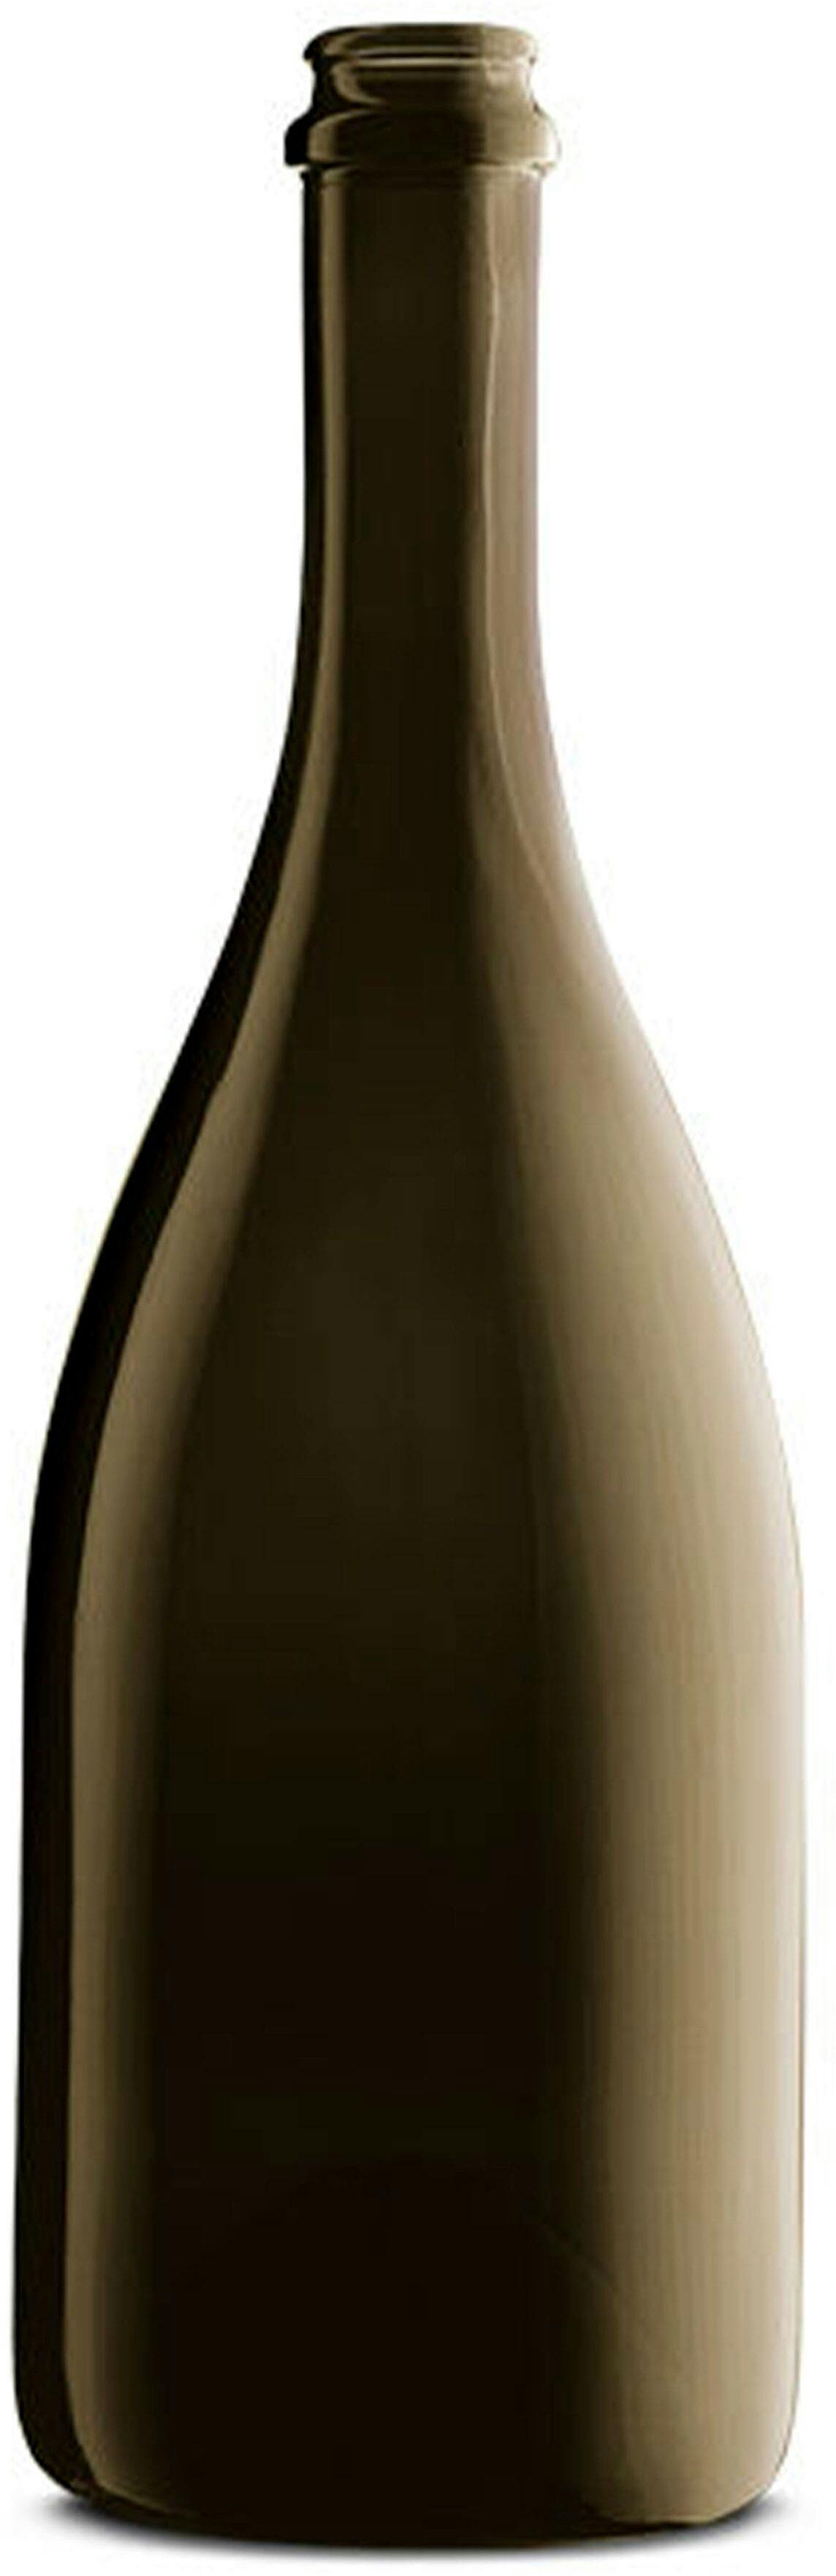 Botella SPUM MONTEROSSA 750 ml BG-corcho